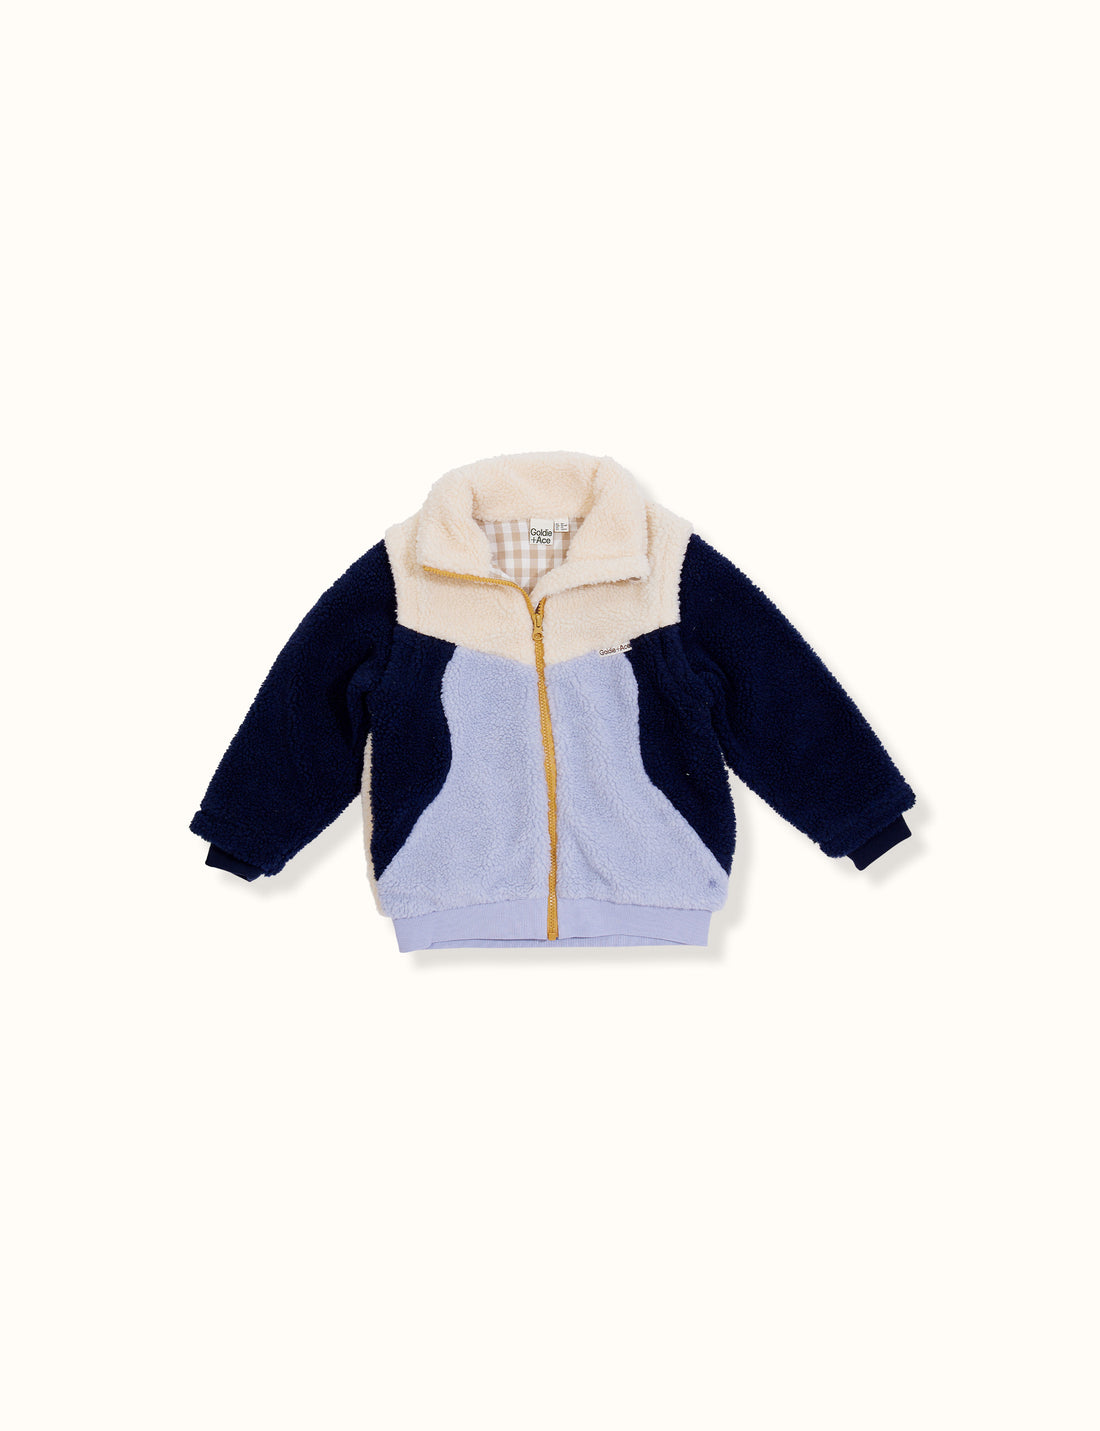 Newborn & Kids Clothing Sale - Goldie + Ace